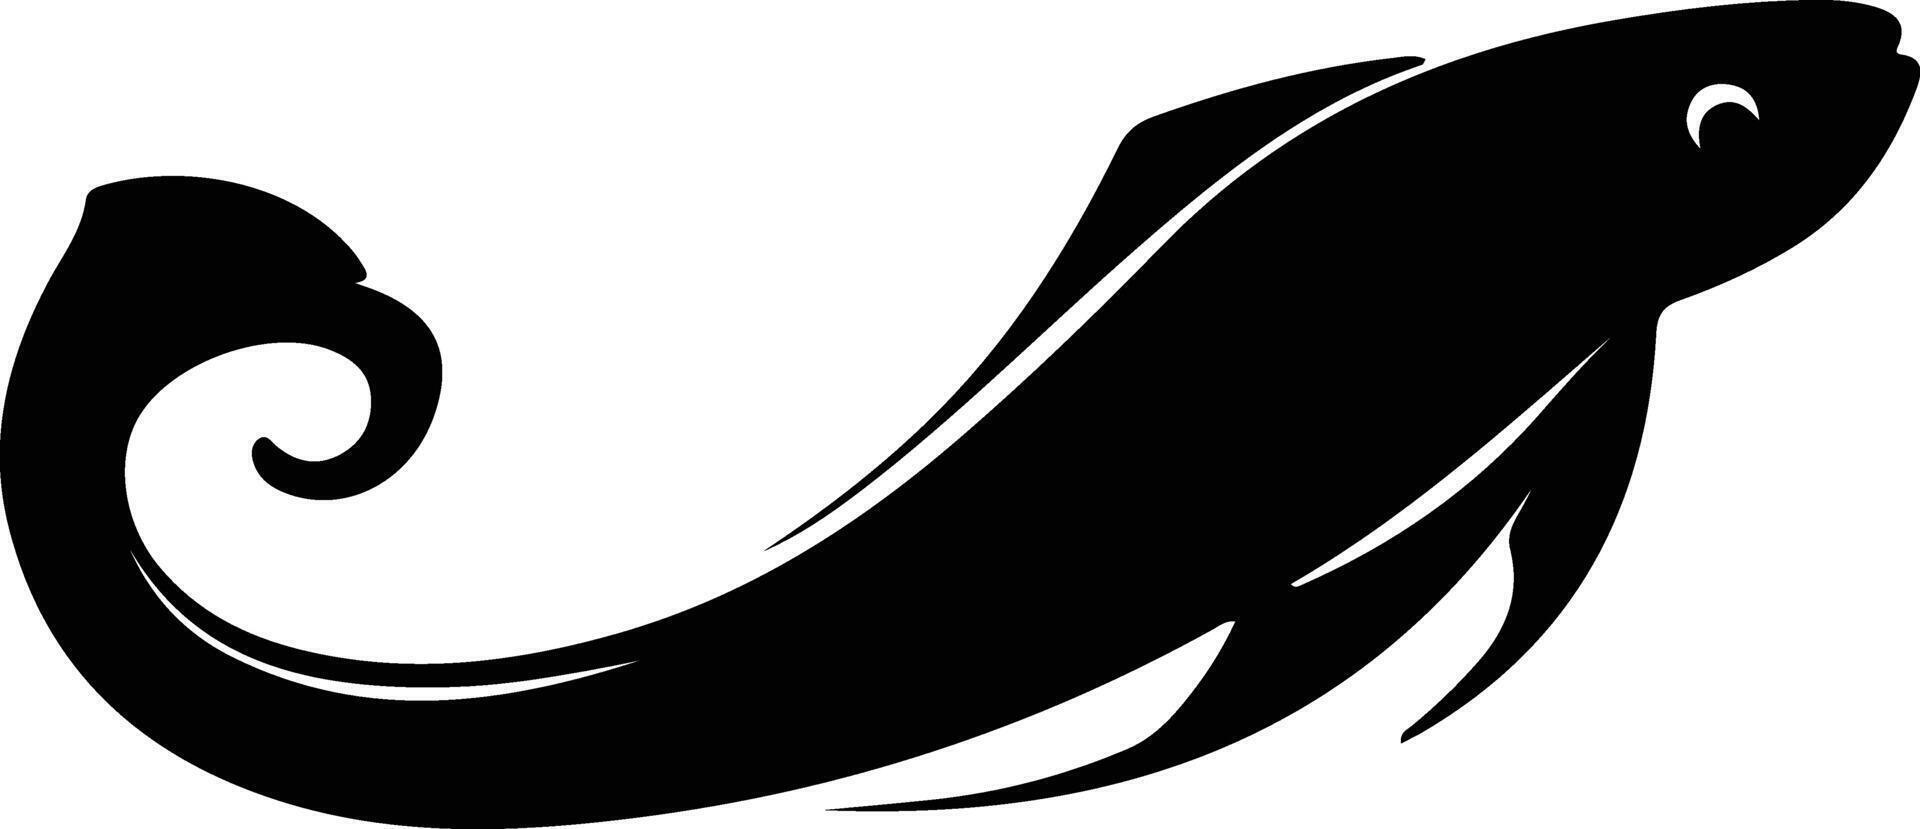 devorador Anguila negro silueta vector